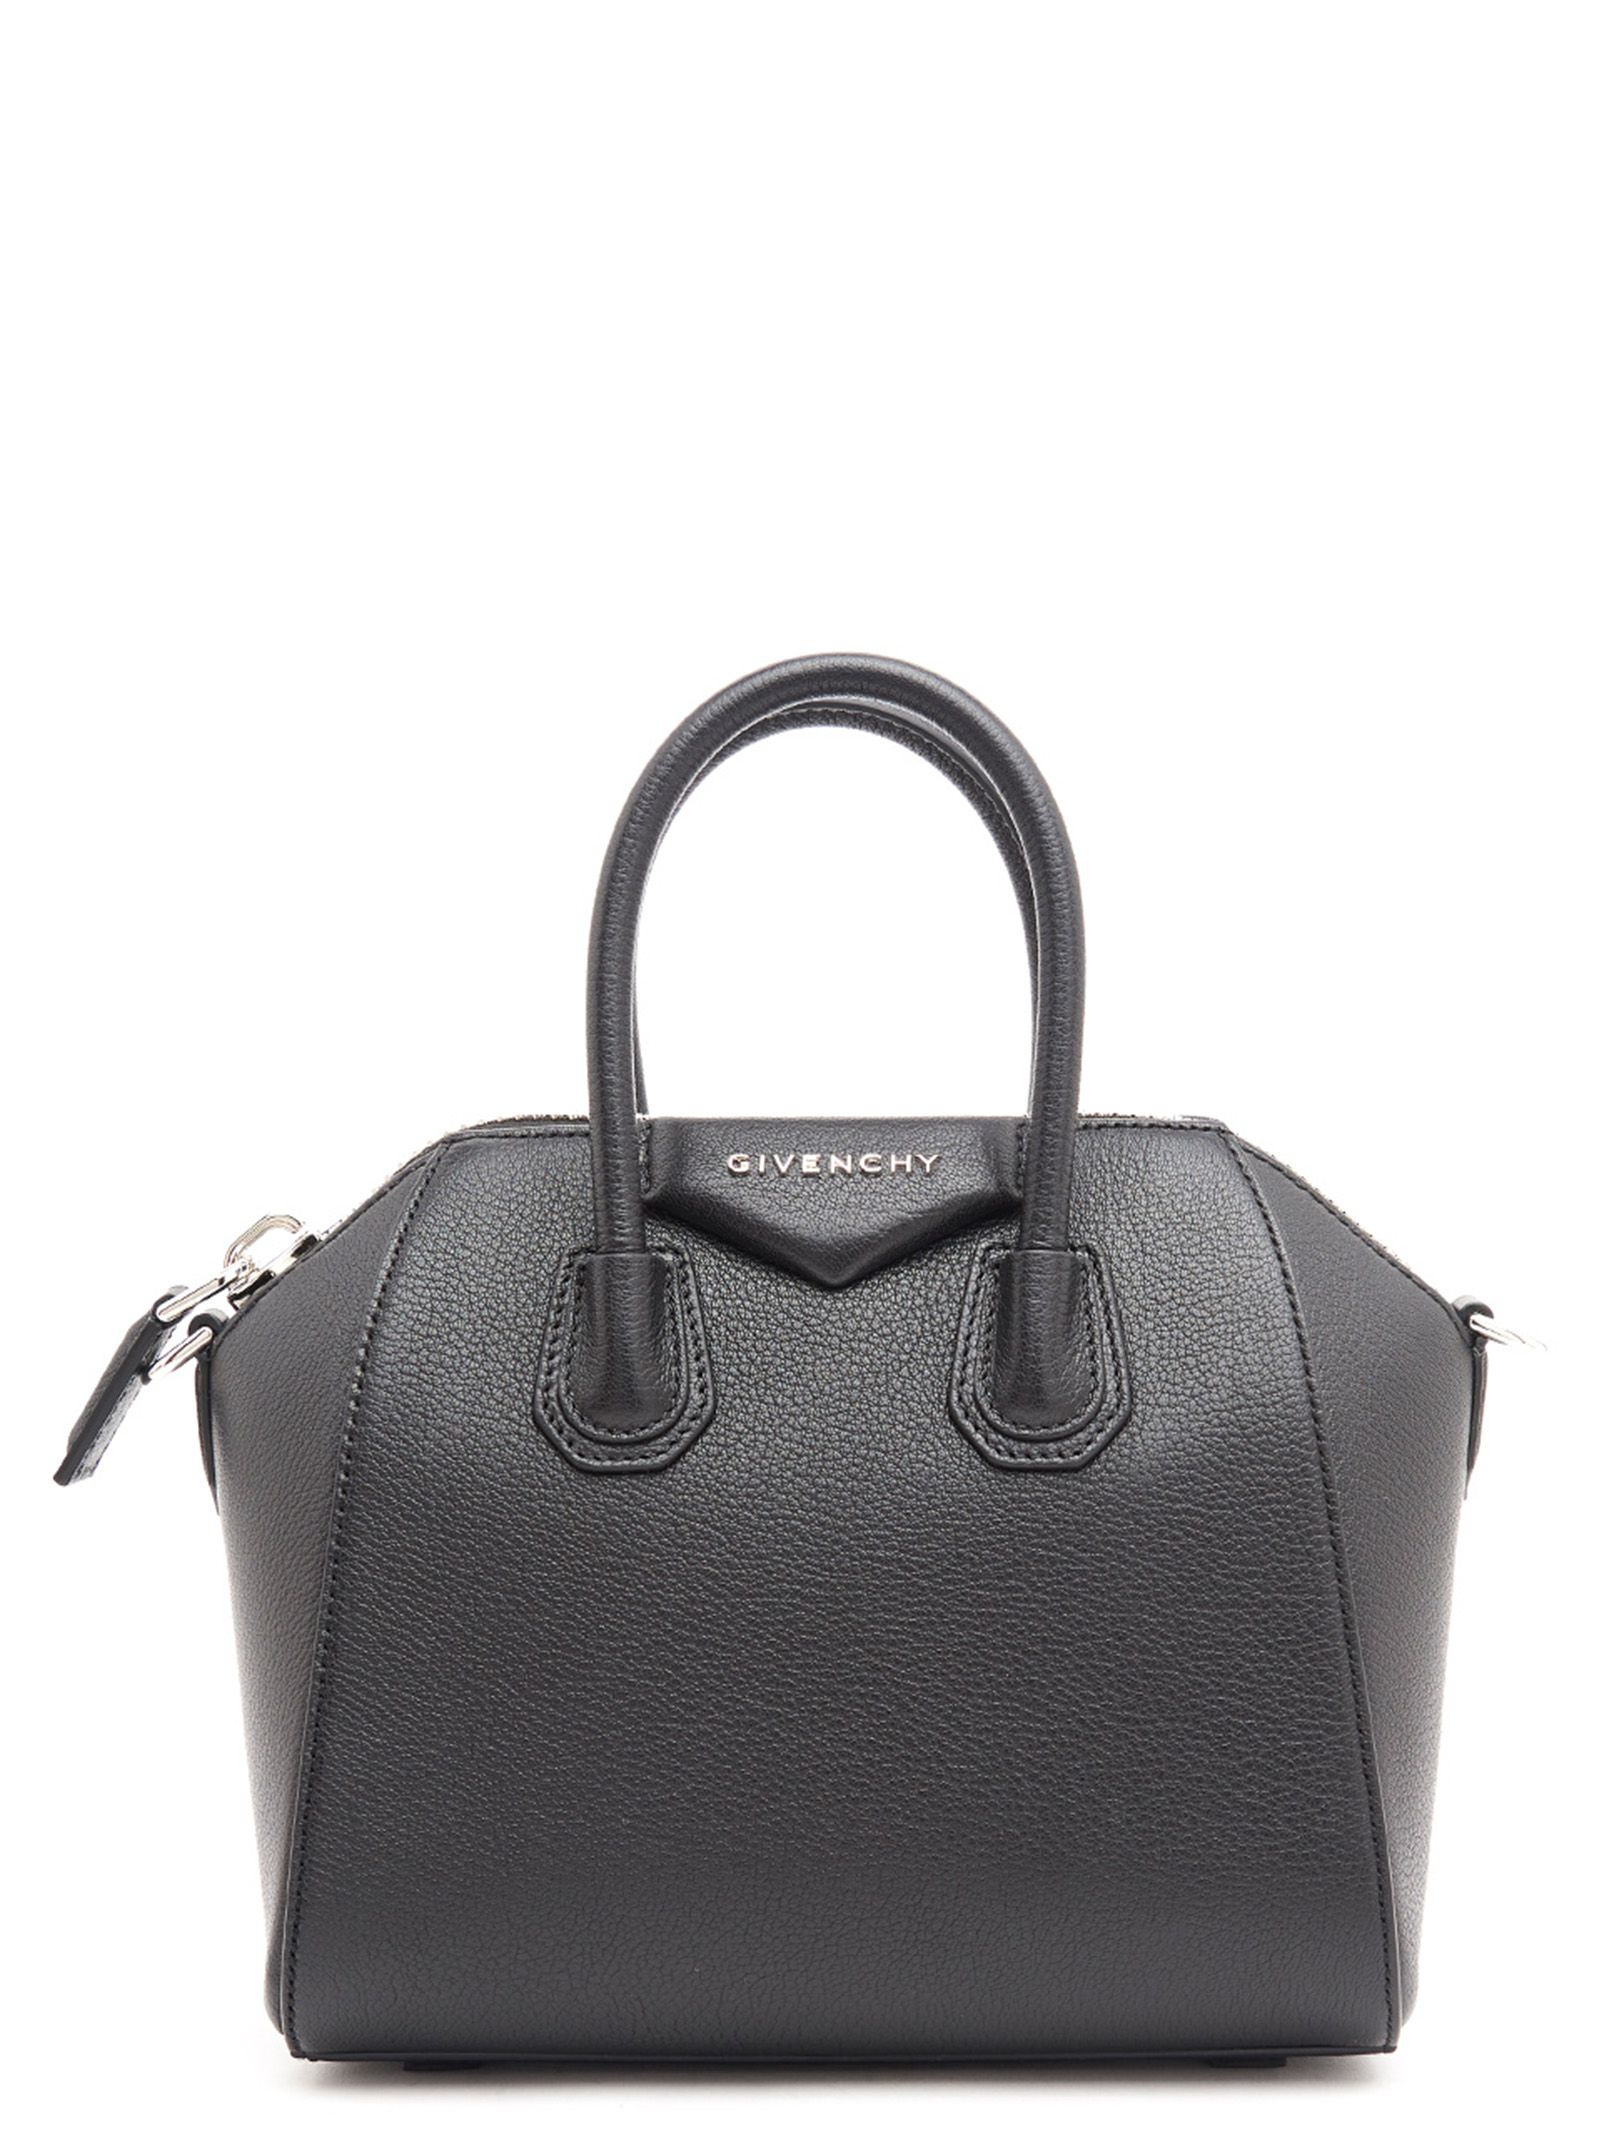 Givenchy Bag In Black | ModeSens